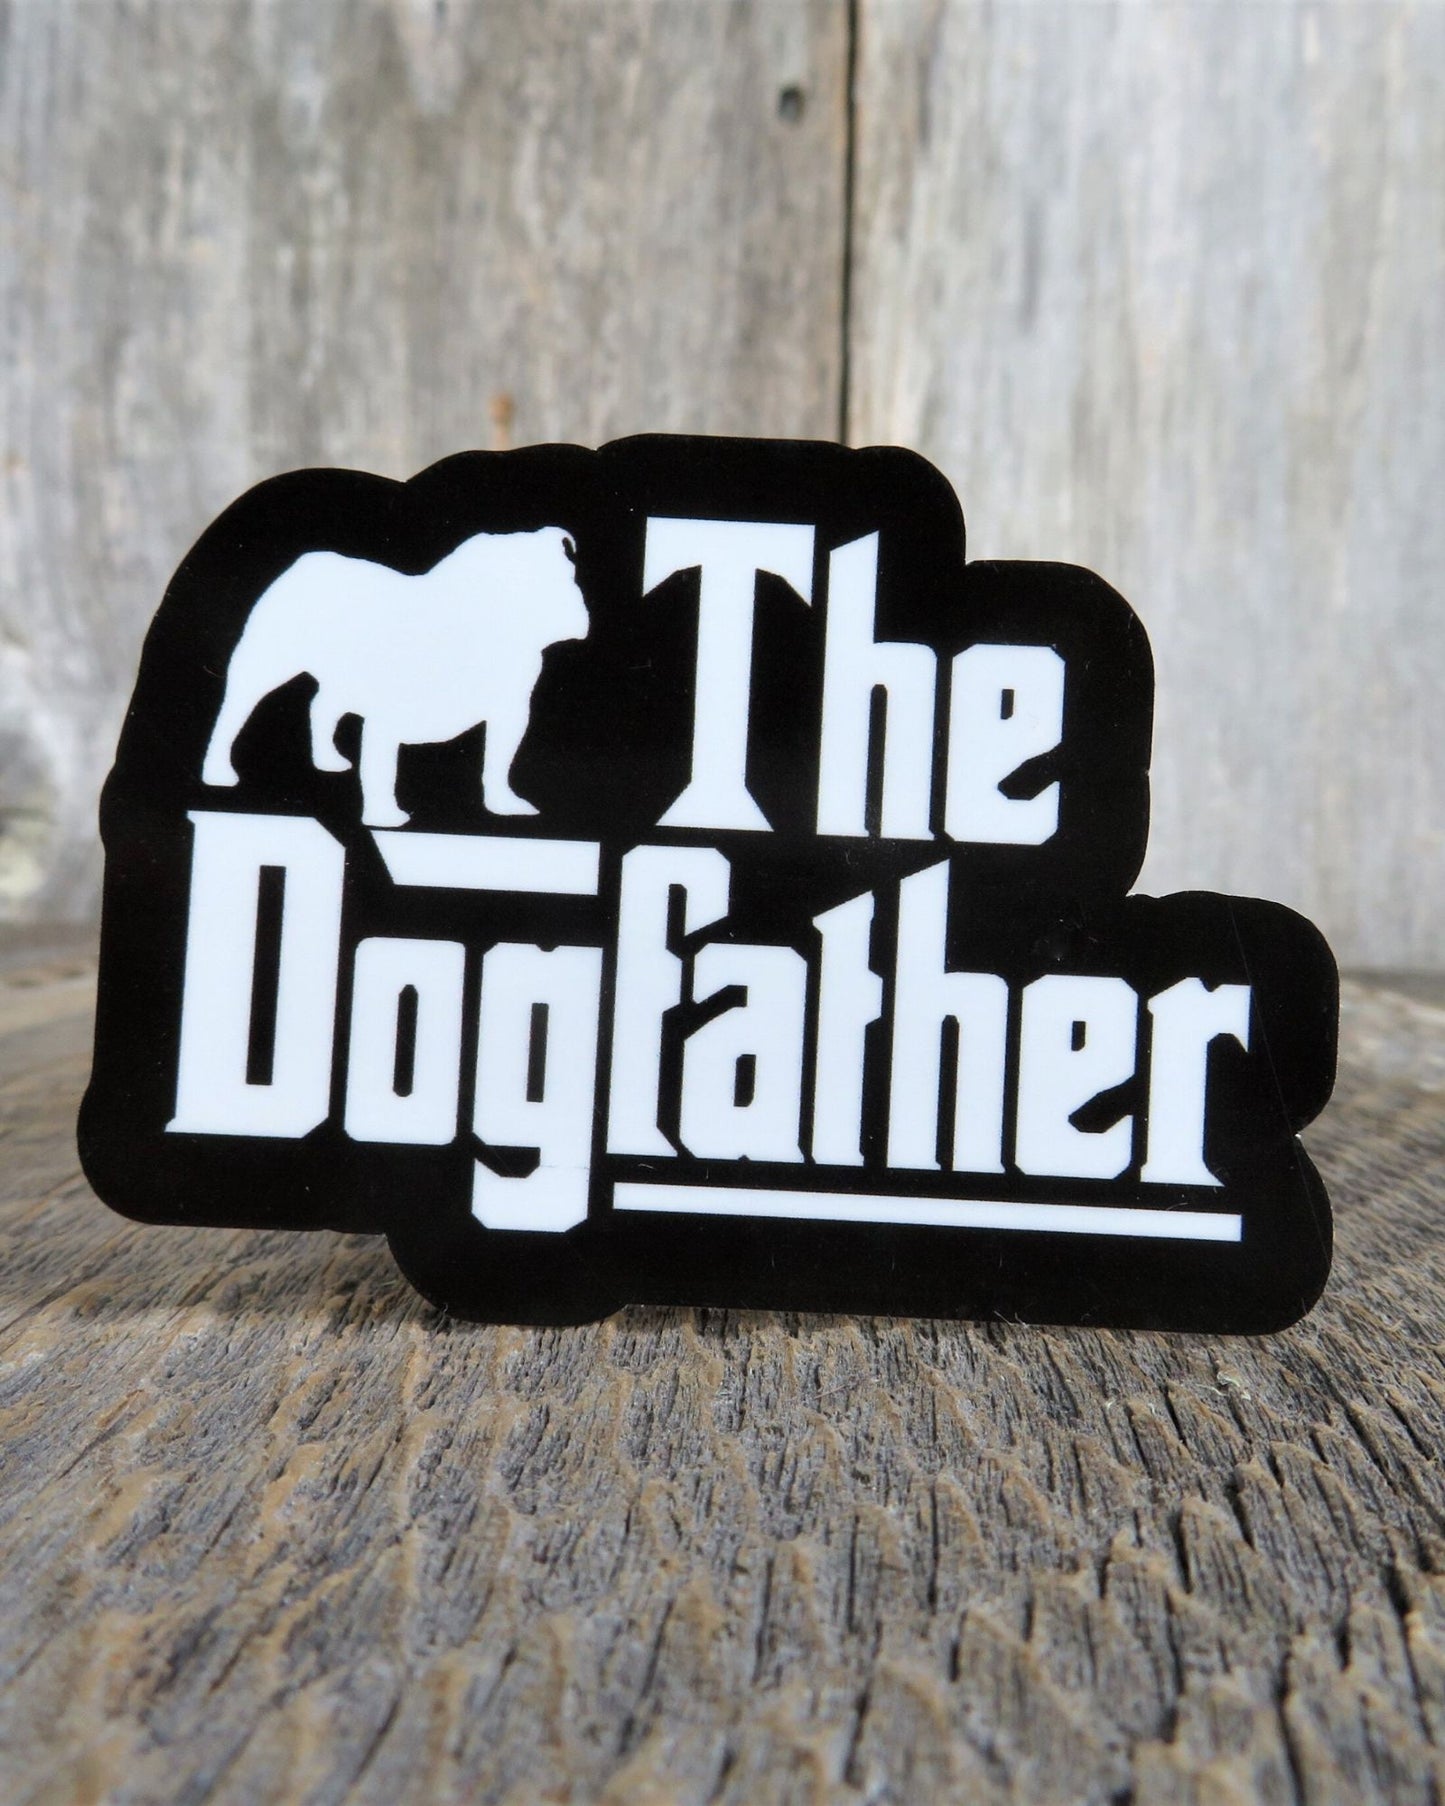 English Bulldog Sticker The Dog Father Dog Dad Waterproof Sticker Godfather Lover Black White Water Bottle Laptop